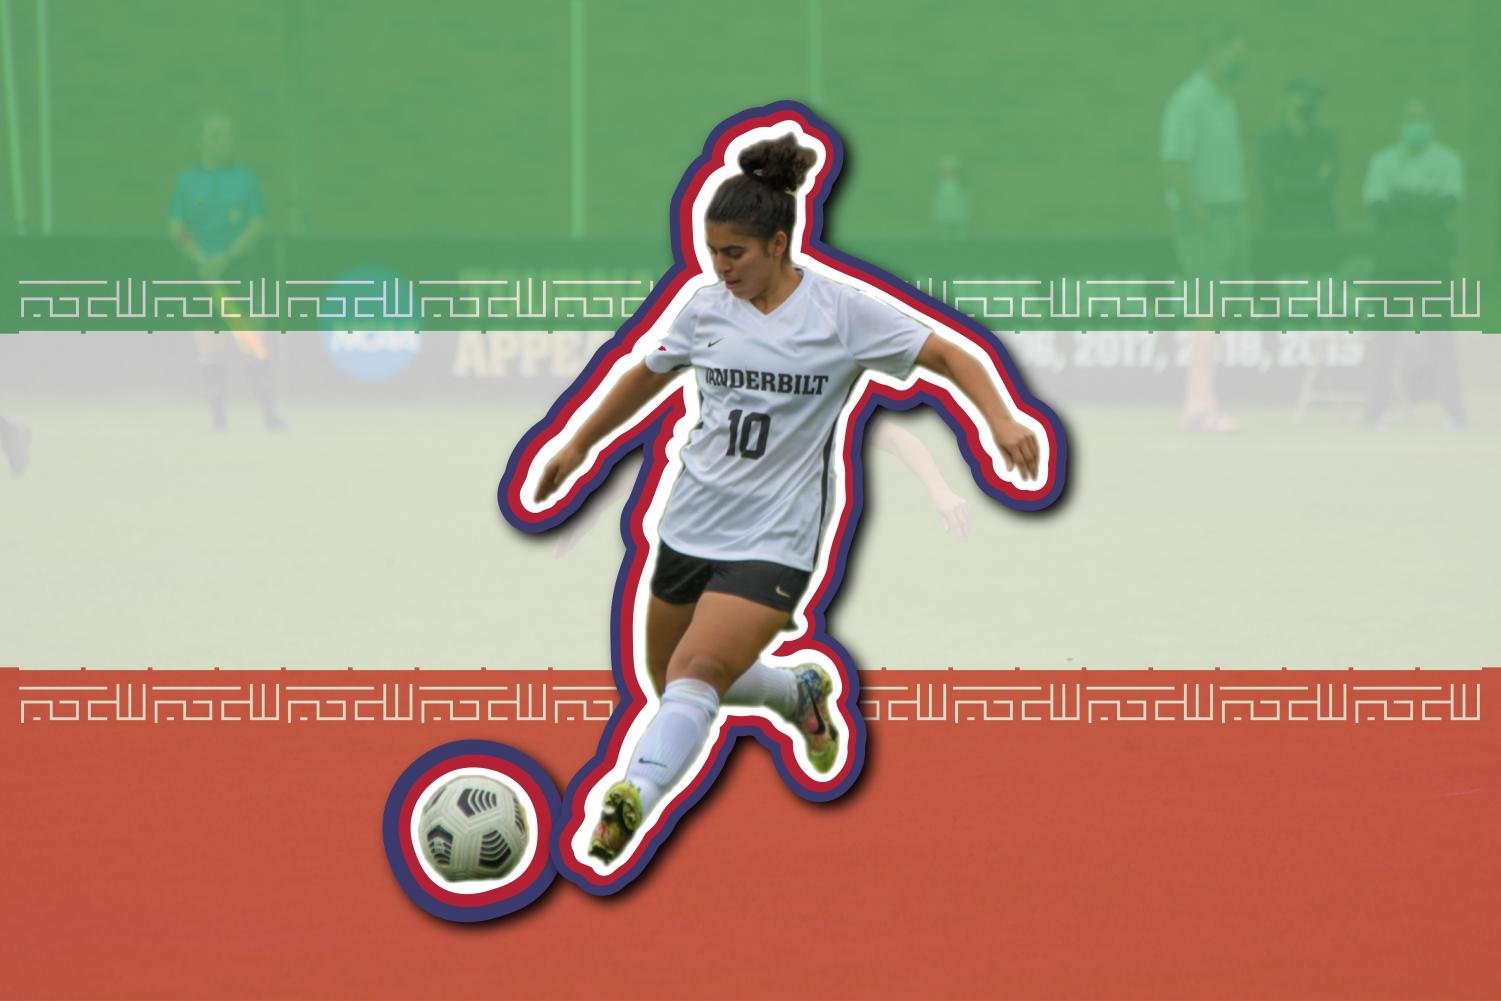 Kimya Raietparvar, a sophomore midfielder, represents both her school and her country. (Hustler Communications/Emery Little)